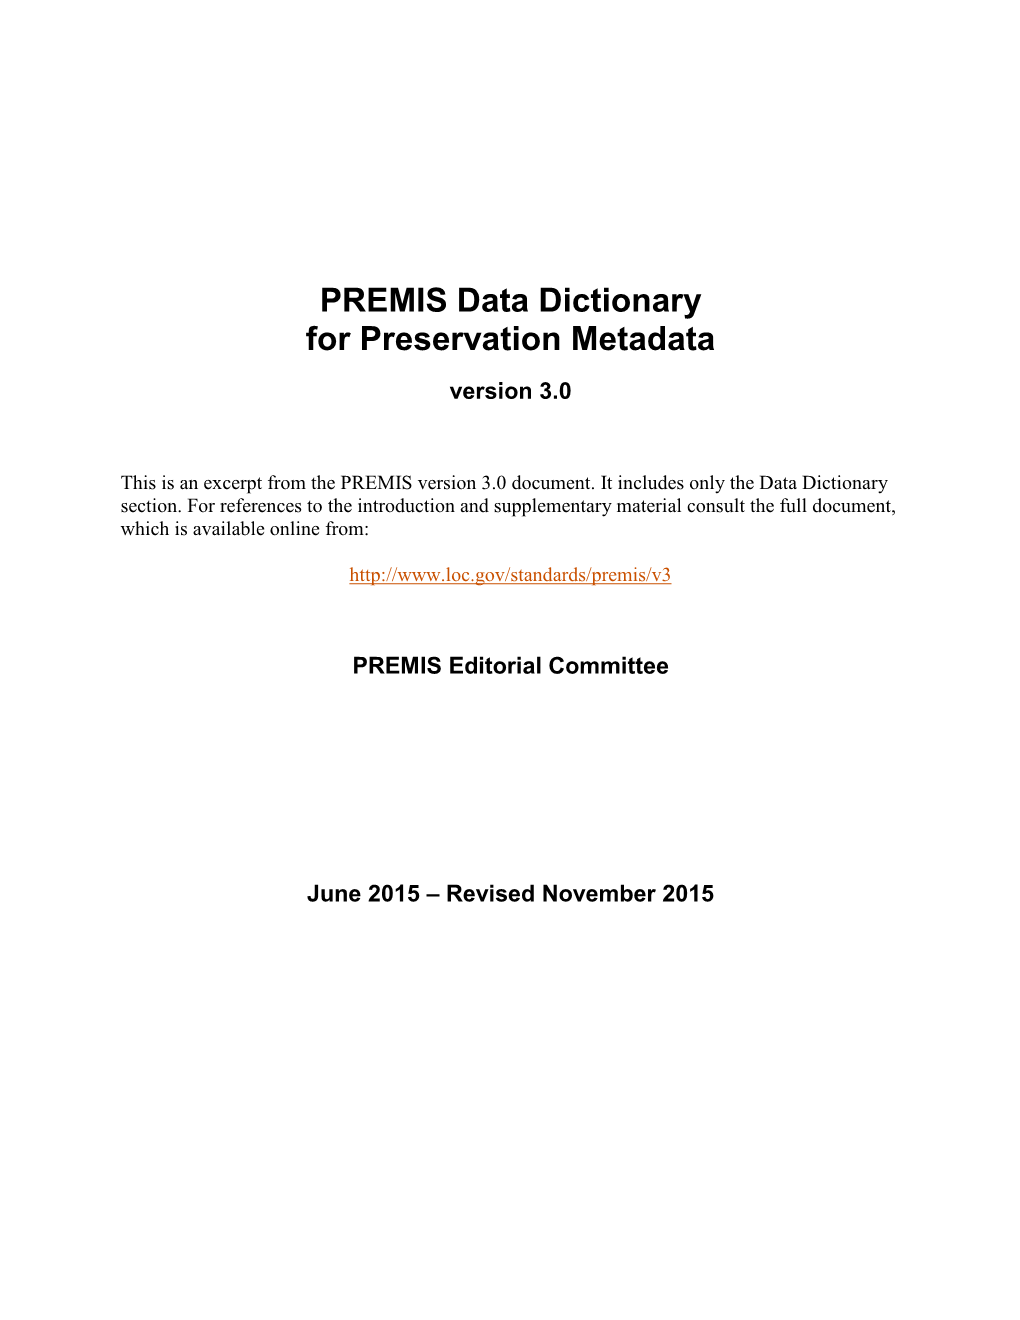 PREMIS Data Dictionary for Preservation Metadata Version 3.0